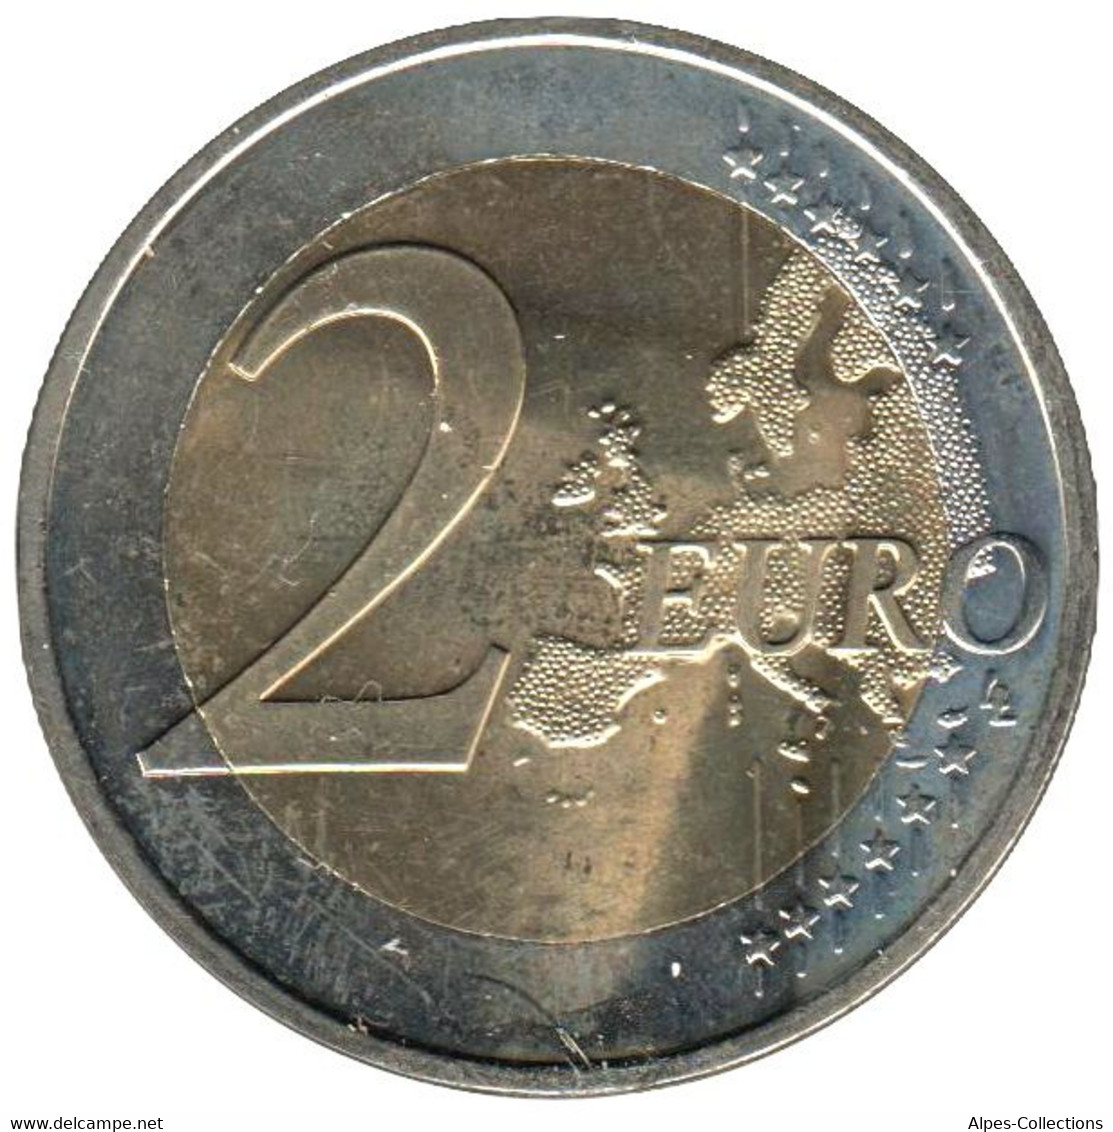 SQ20019.1 - SLOVAQUIE - 2 Euros Commémo. Milan Rastislav Stefanik - 2019 - Slovaquie